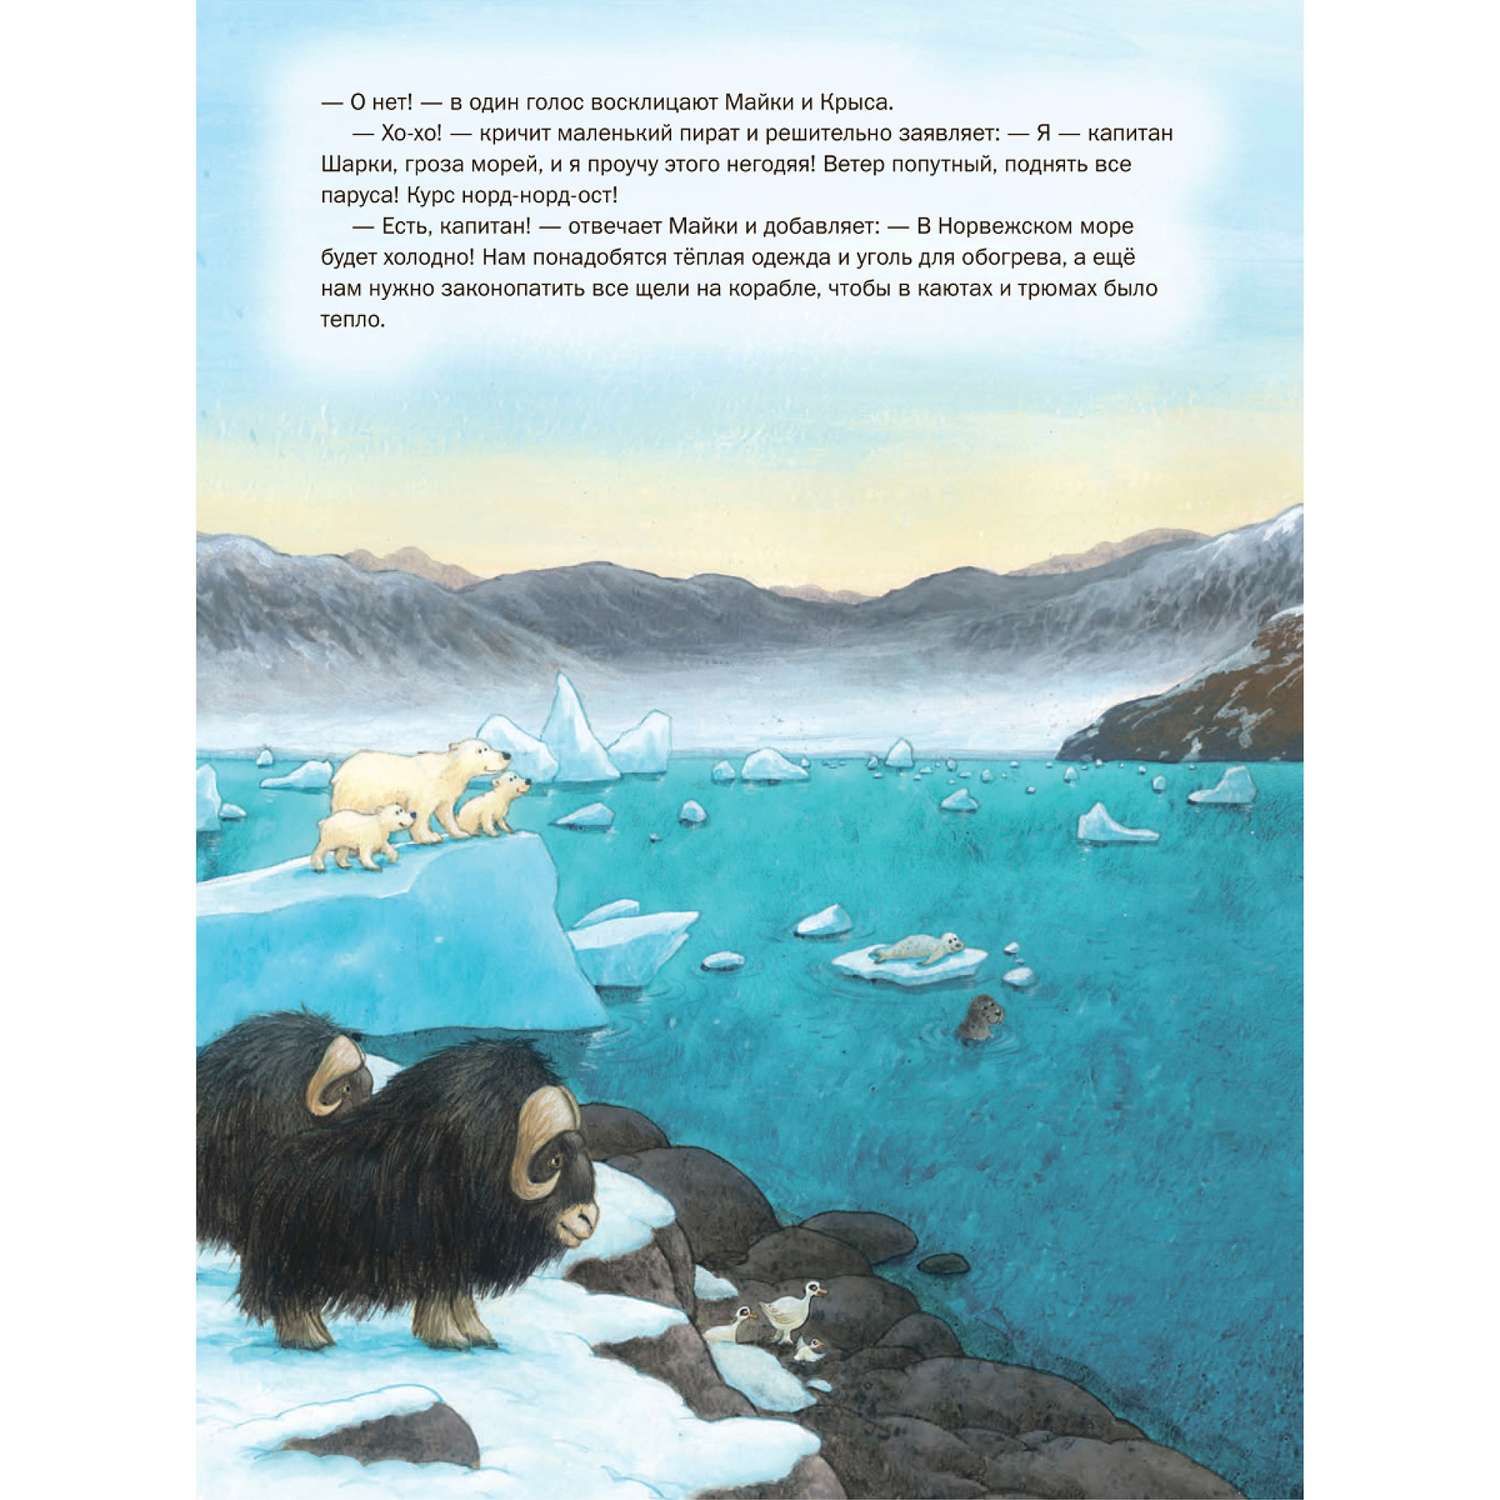 Книга Добрая книга Капитан Шарки спасает малютку кита. Иллюстрации Сильвио Нойендорфа - фото 8